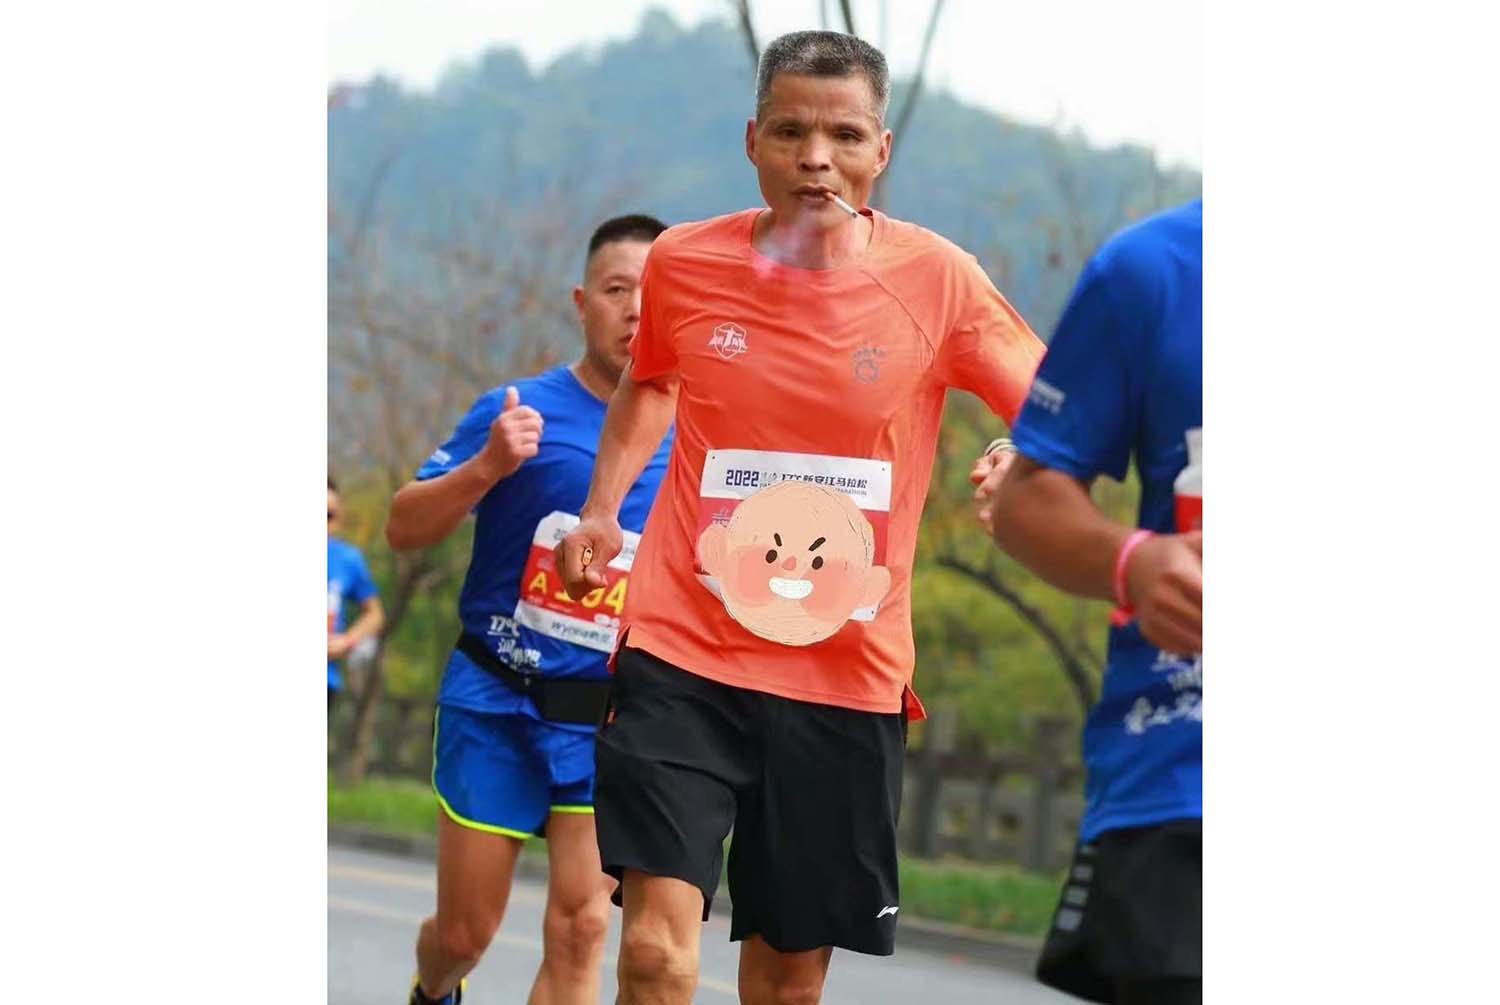 Trung Quốc cấm vừa hút thuốc vừa chạy marathon- Ảnh 1.